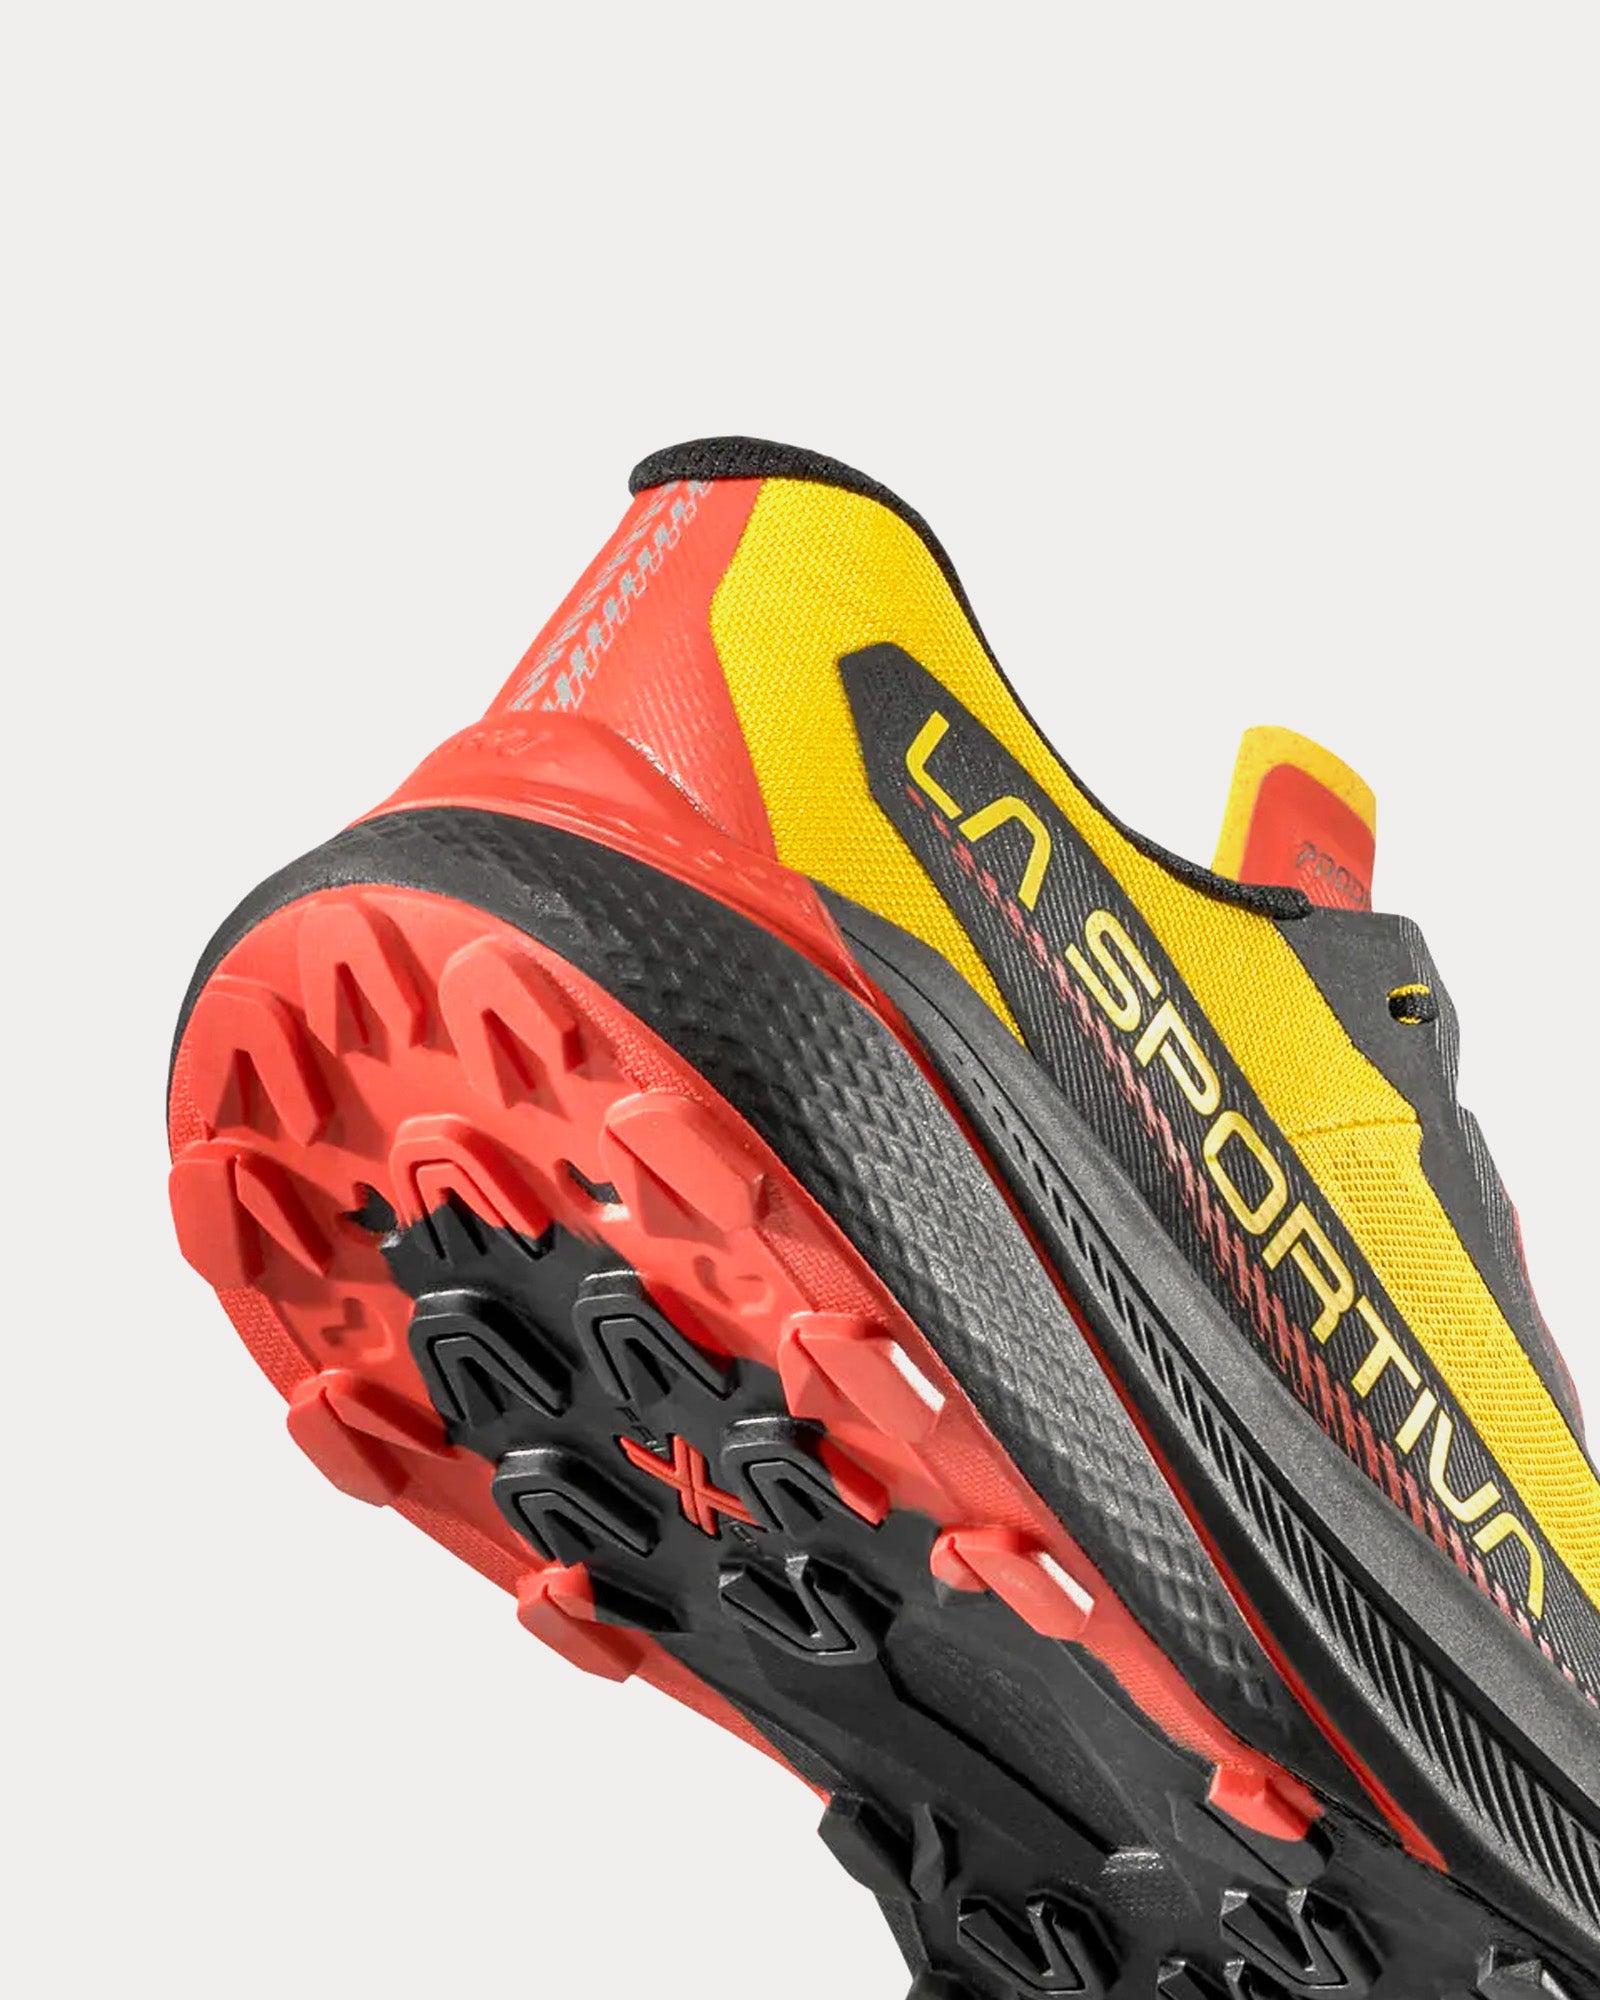 La Sportiva - Prodigio Yellow / Black Running Shoes